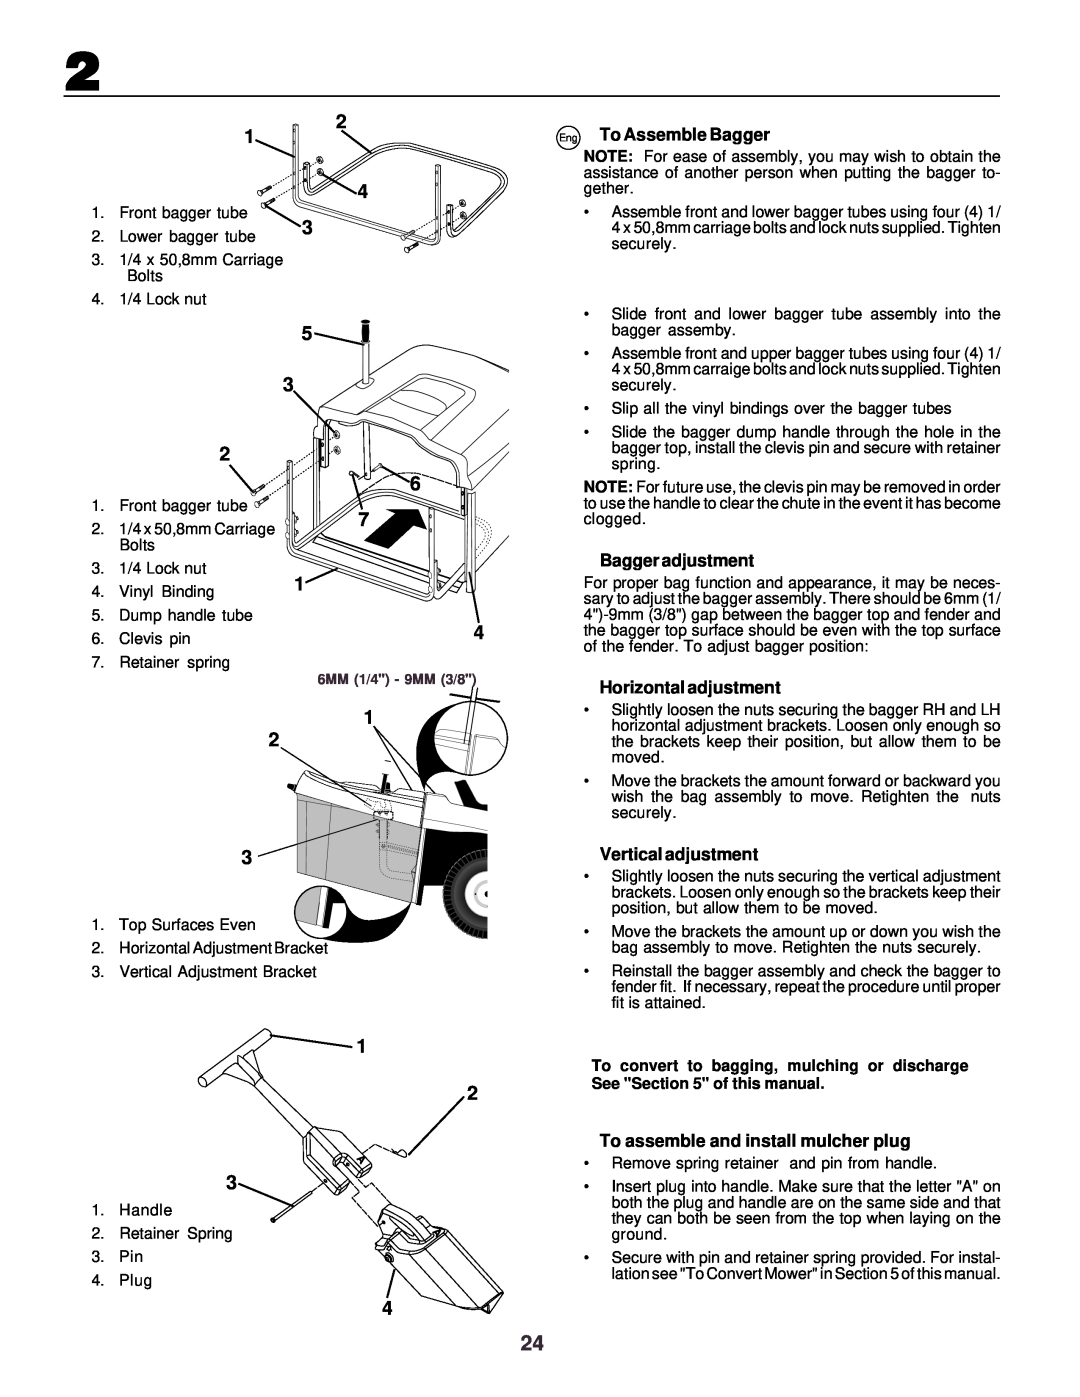 Husqvarna CTH130 instruction manual Eng To Assemble Bagger, Bagger adjustment, Horizontal adjustment, Vertical adjustment 